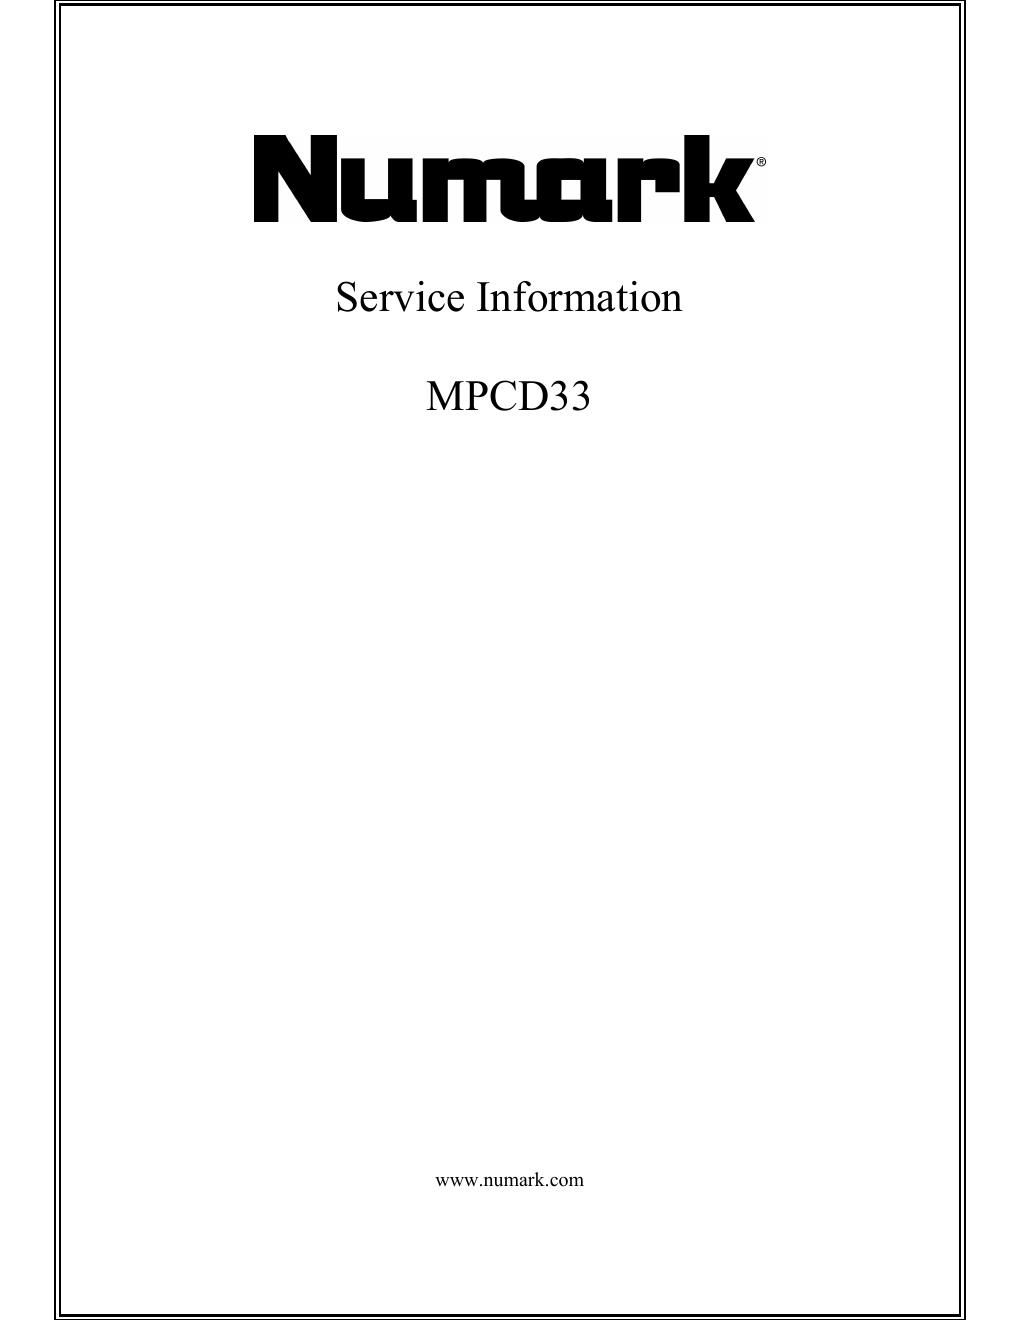 numark mpcd 33 service manual